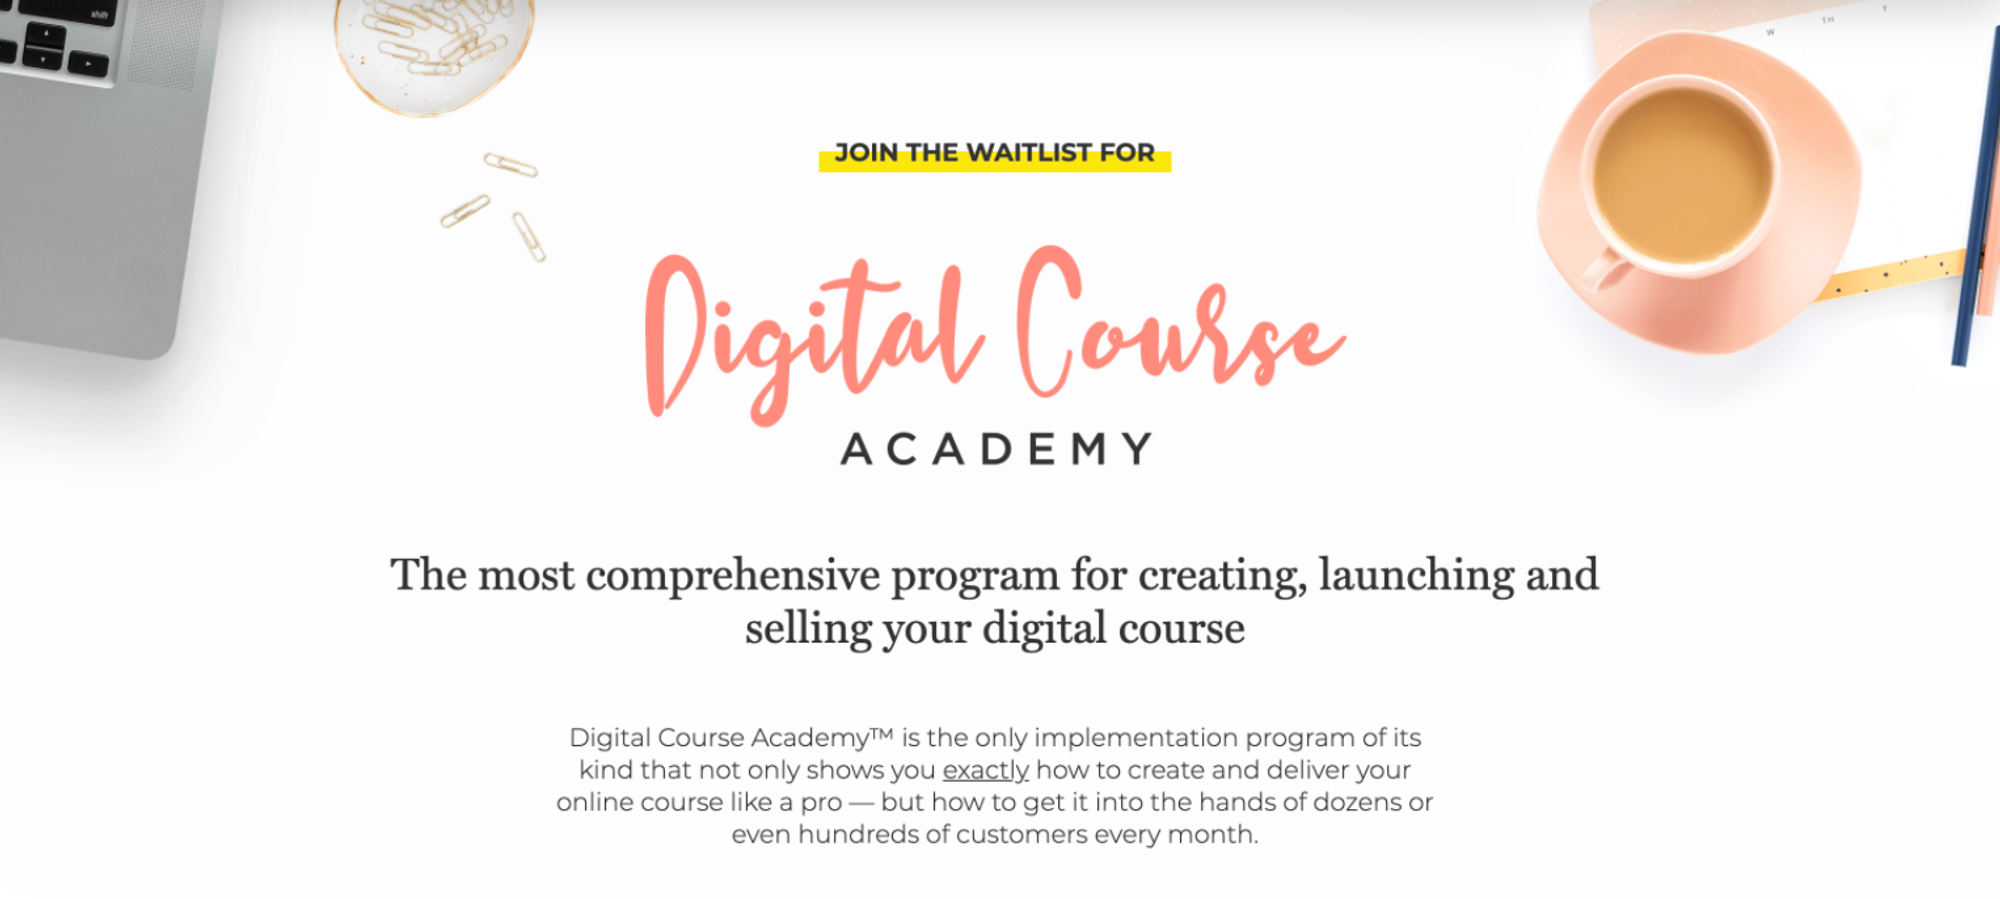 Digital Course Academy